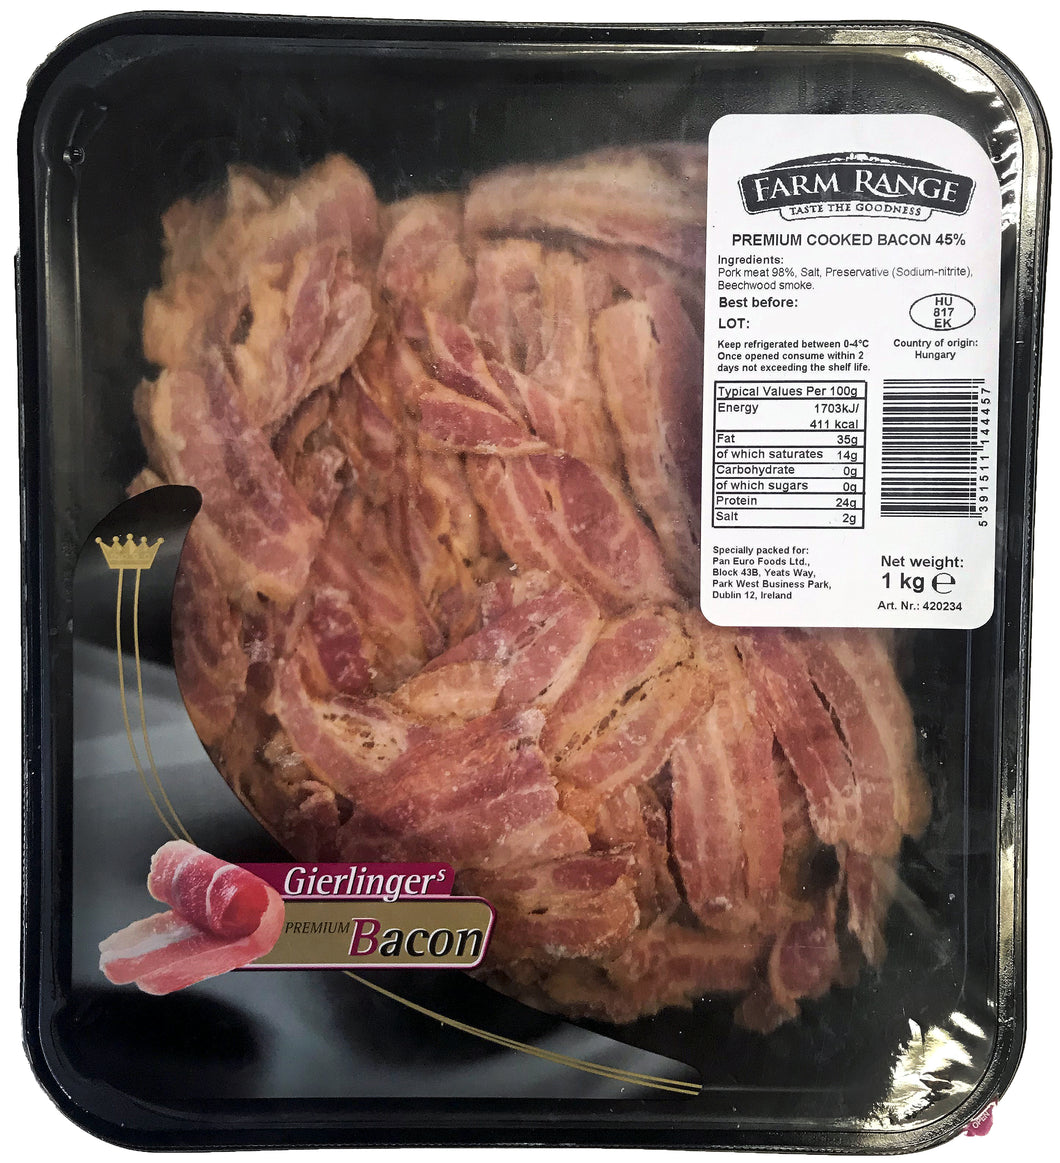 Farm Range Premium Cooked Bacon 1kg